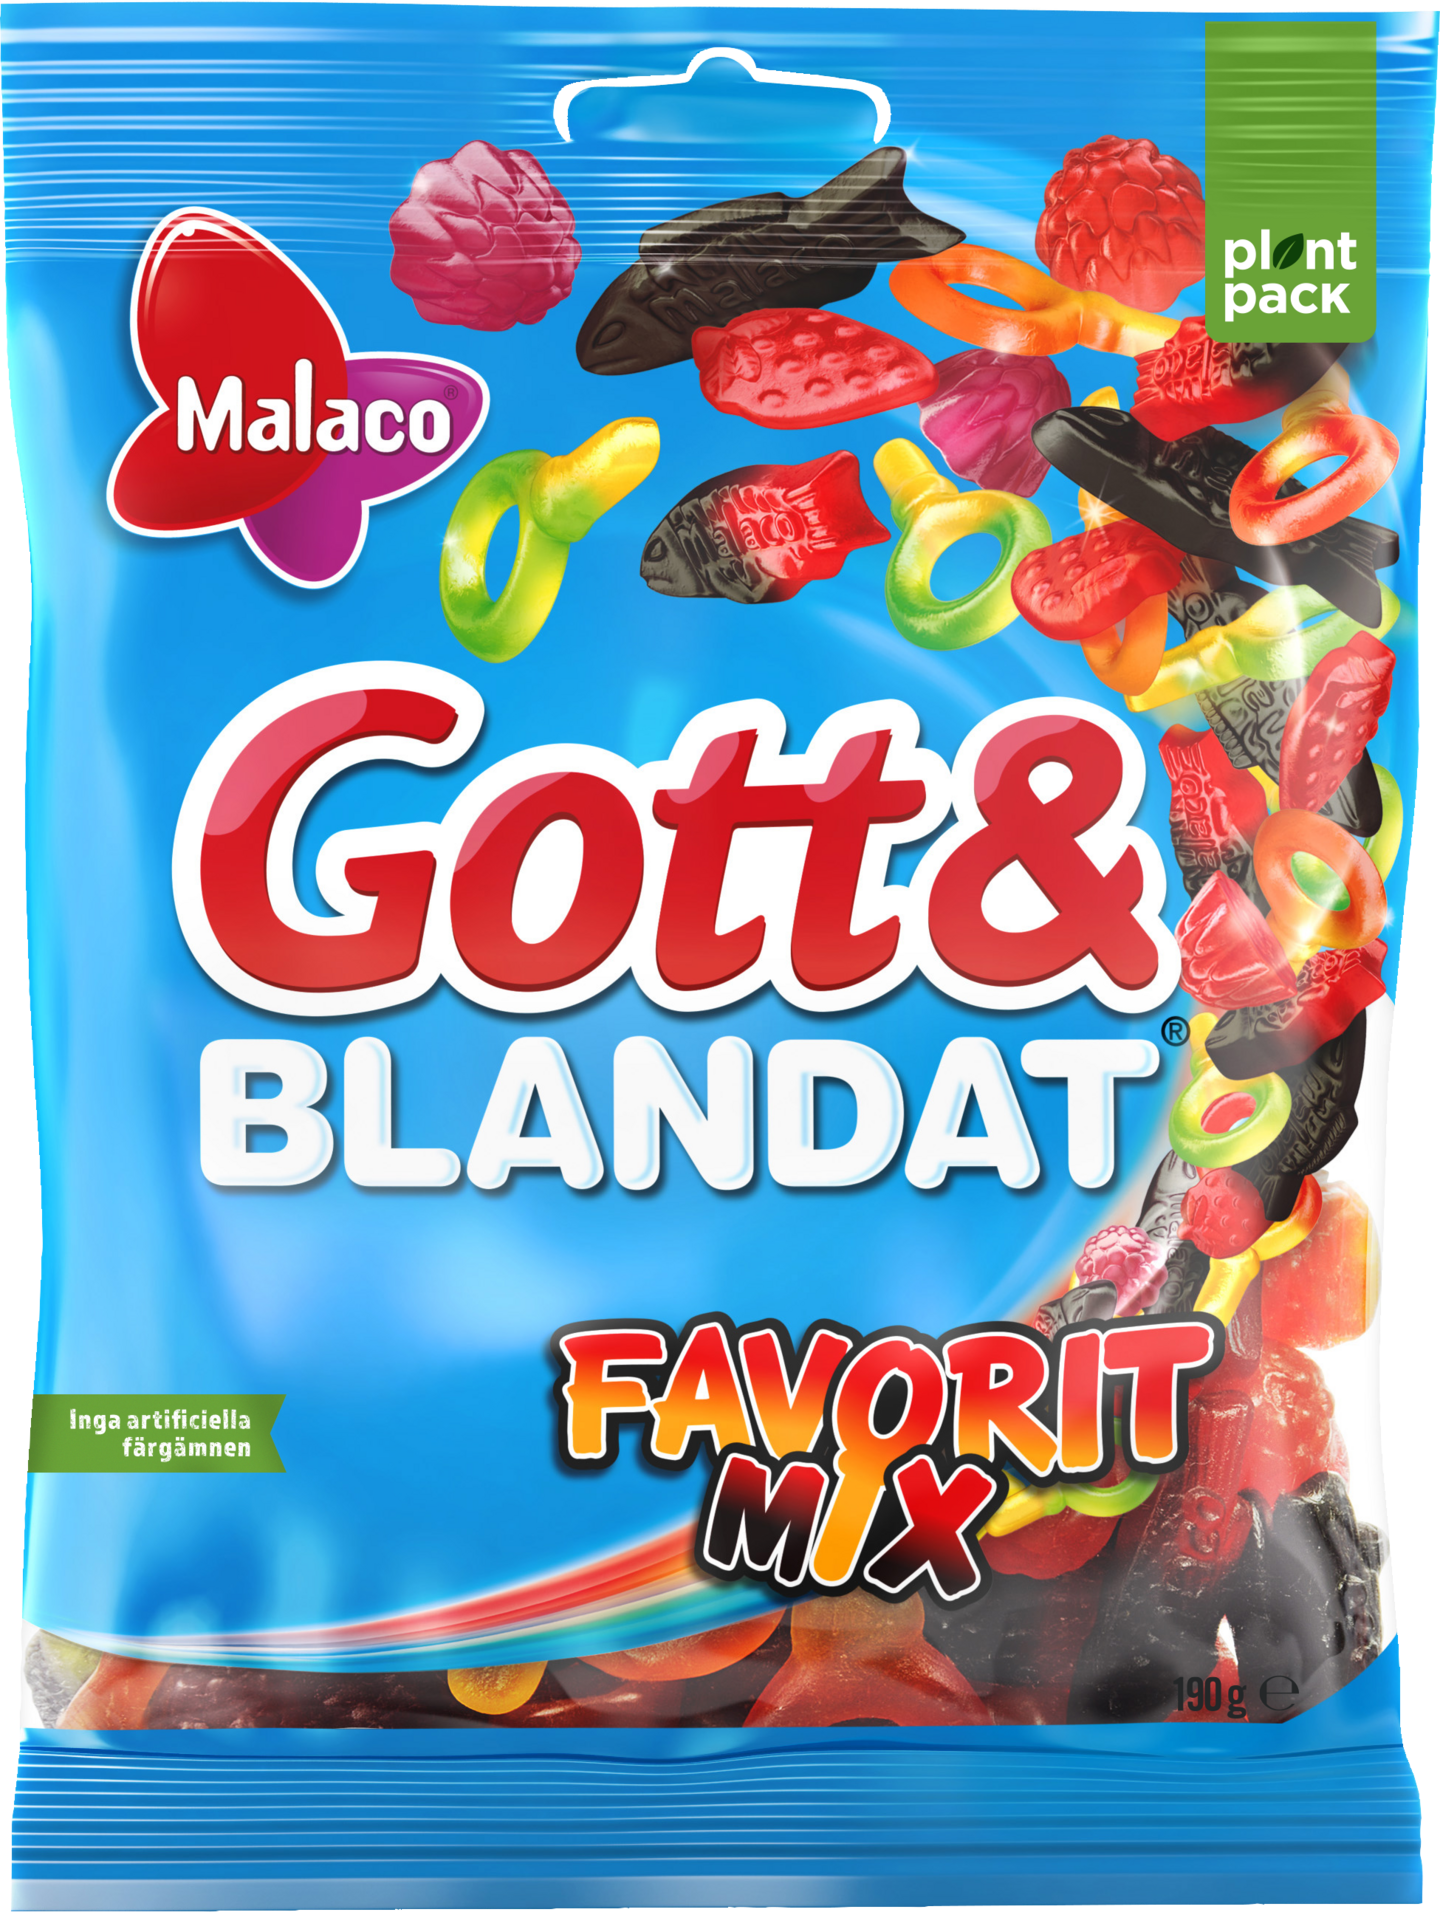 Malaco Gott&Blandat Favoritmix 190g